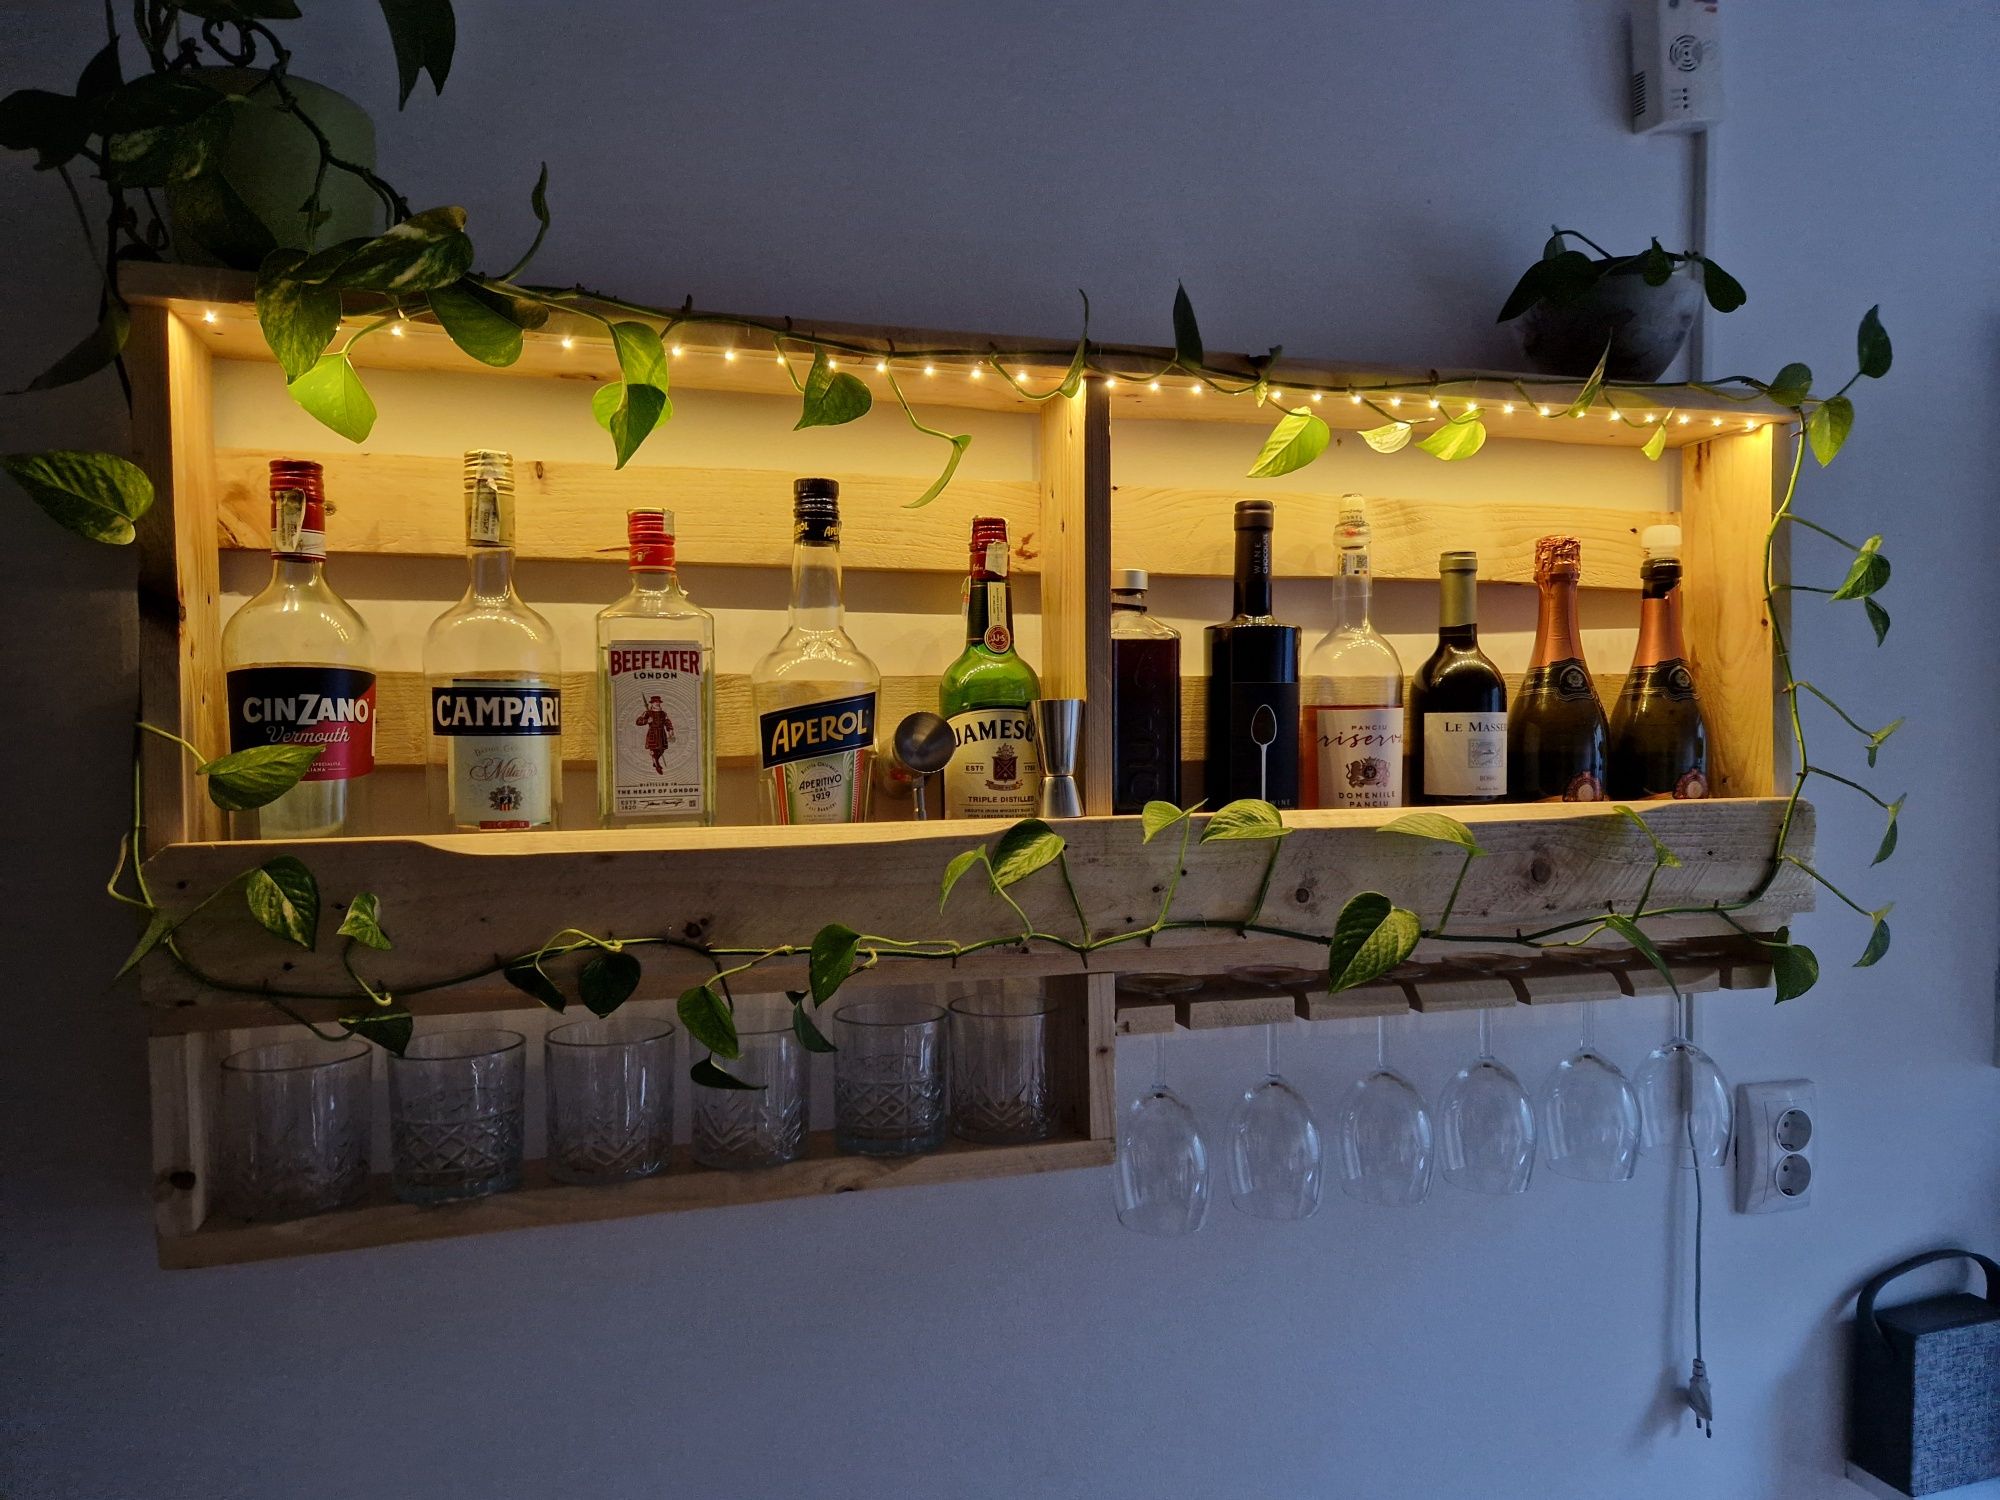 Raft suport perete bauturi, sticle și pahare whiskey / vin